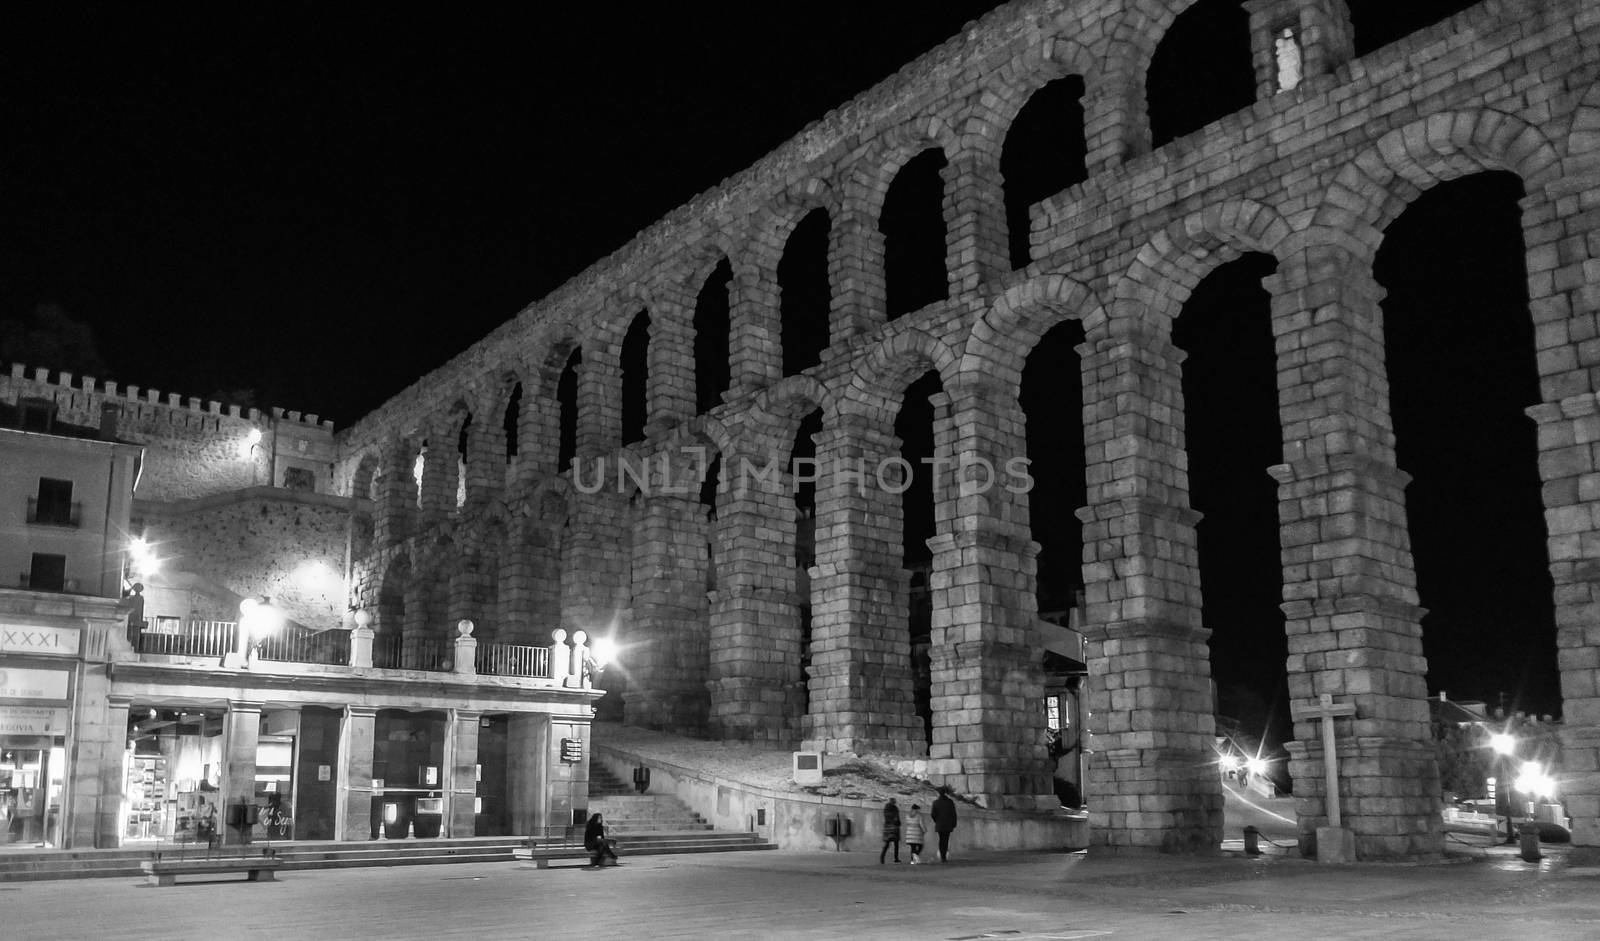 The famous aqueduct of Segovia, Spain at night.